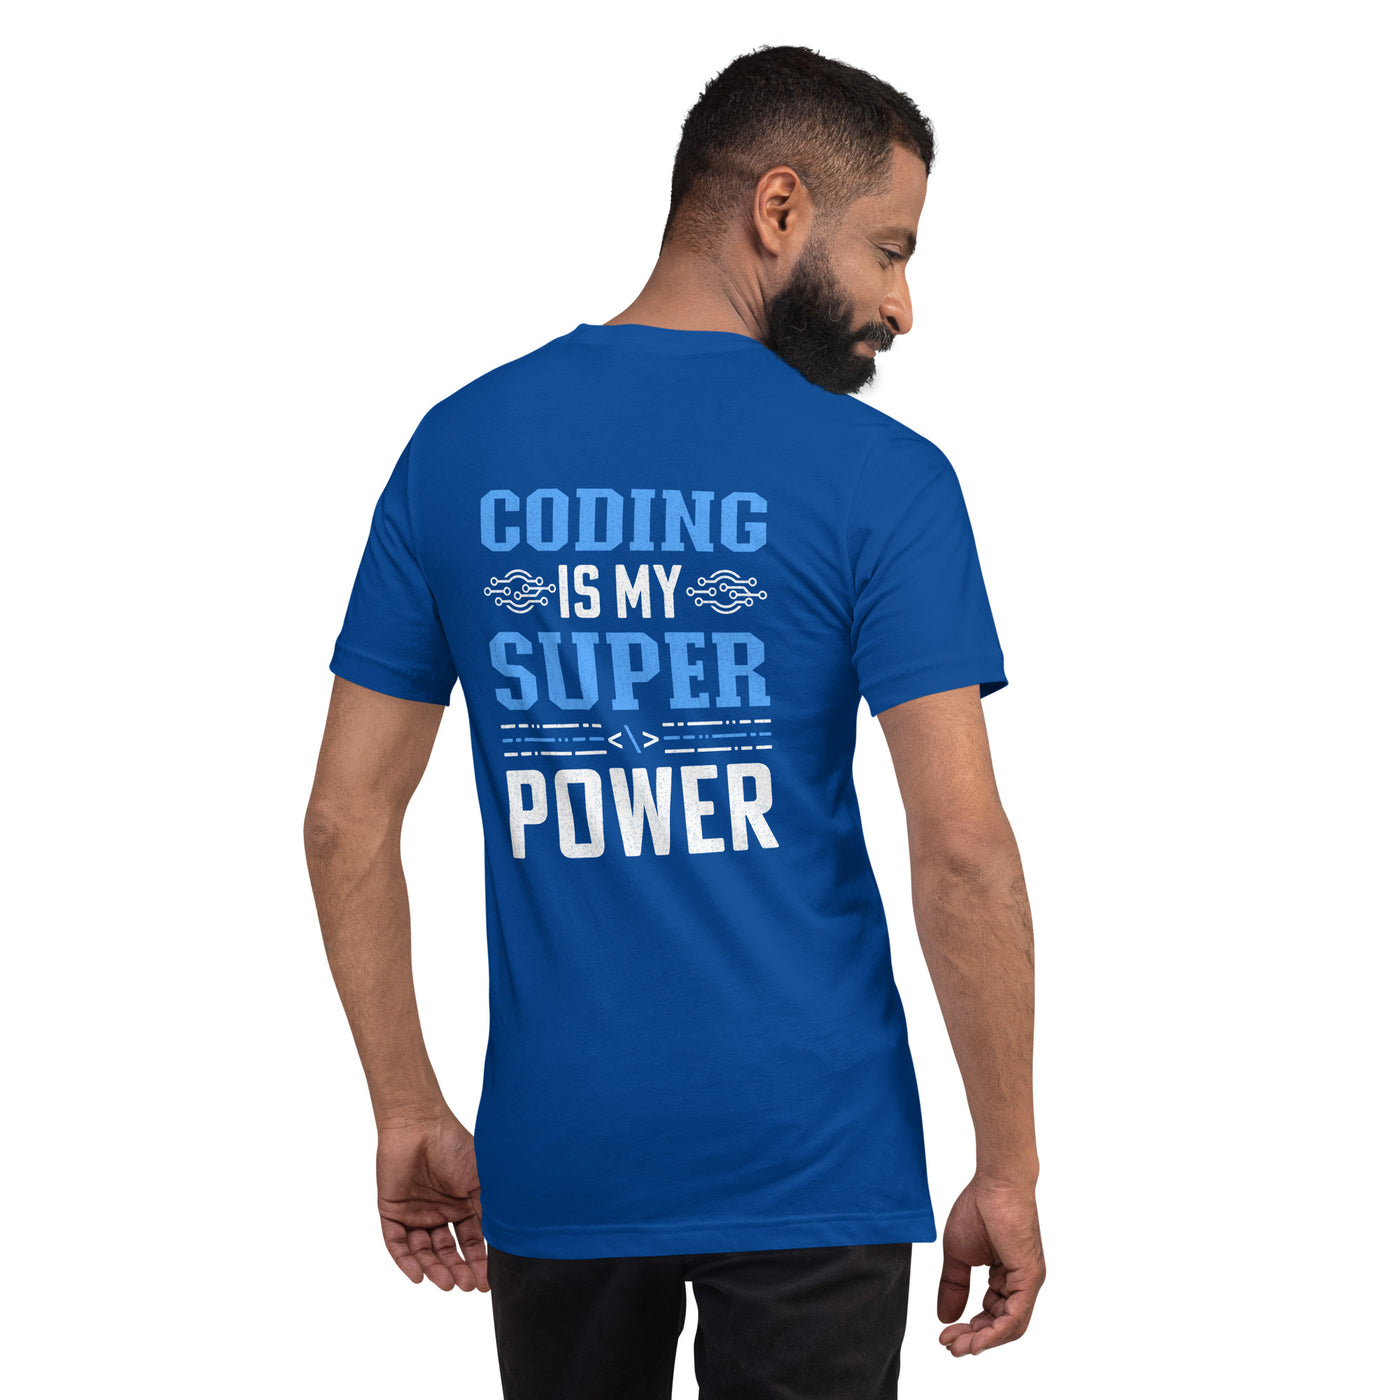 Coding is My Super Power - Unisex t-shirt ( Back Print )